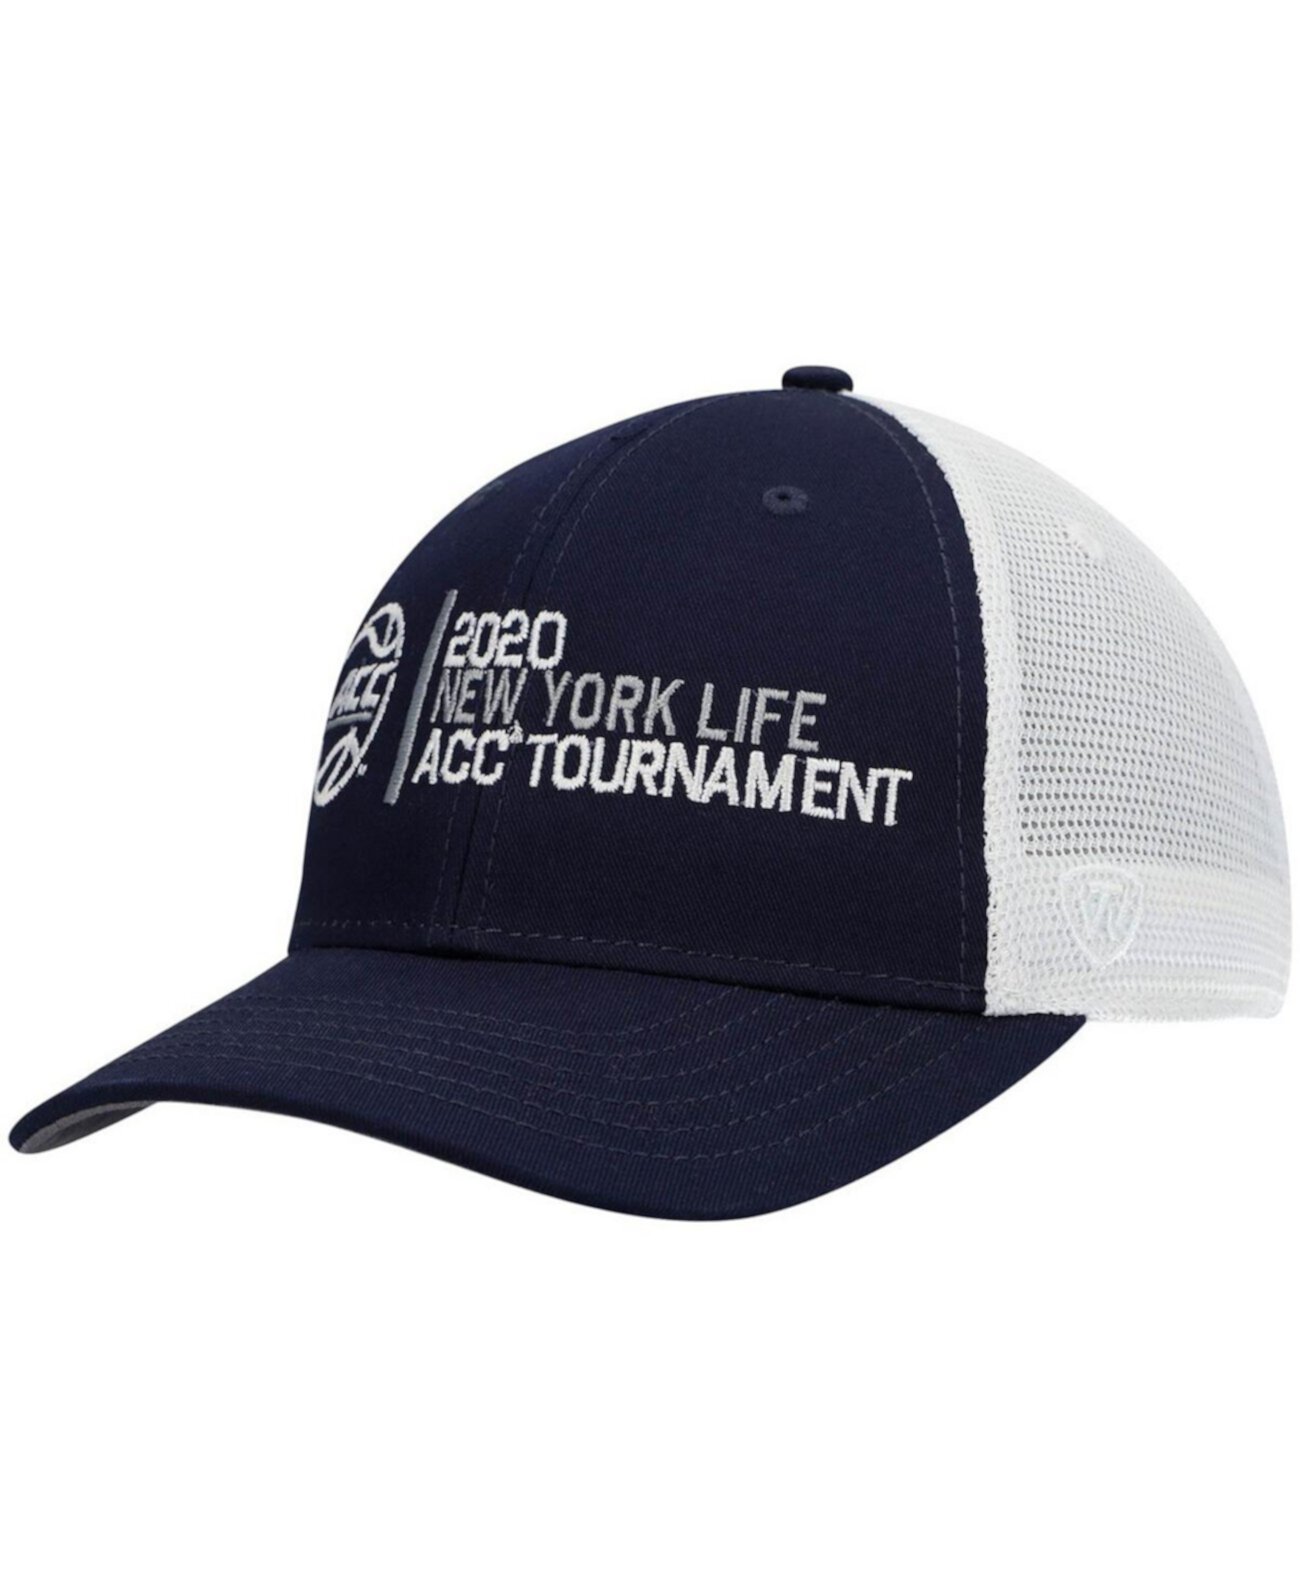 Мужская темно-синяя кепка Acc Tournament 2020 с регулируемой сеткой Snapback Top of the World